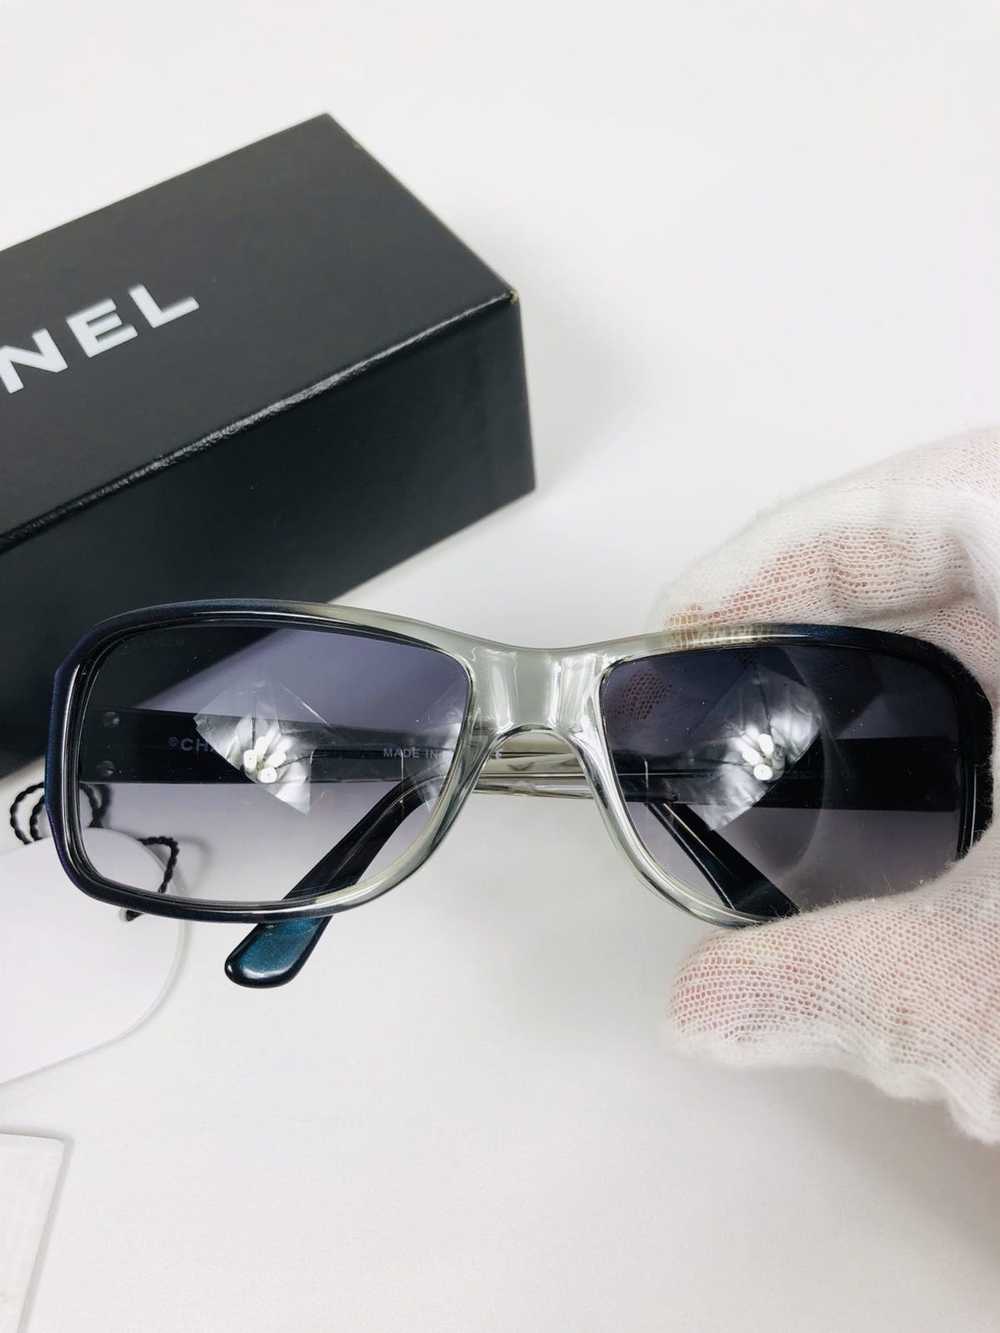 Chanel Chanel cc logo sunglasses - image 2